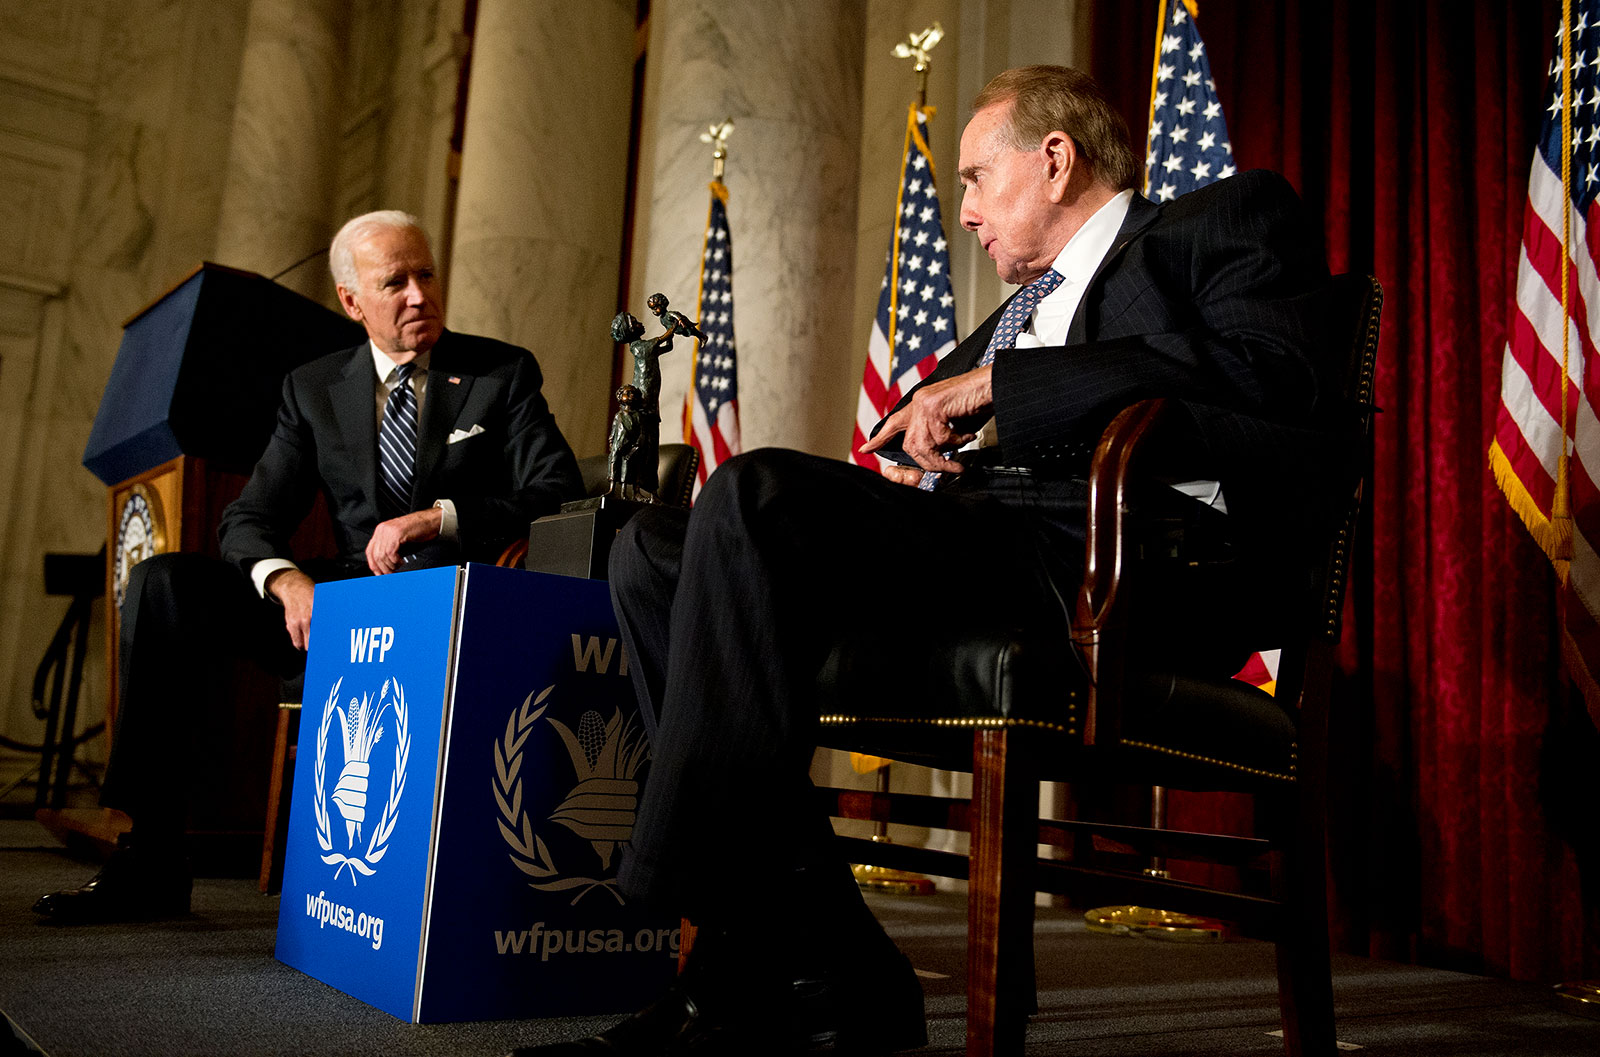 Then-Vice President Joe Biden and Bob Dole talk at an event in Washington, DC, in 2013.